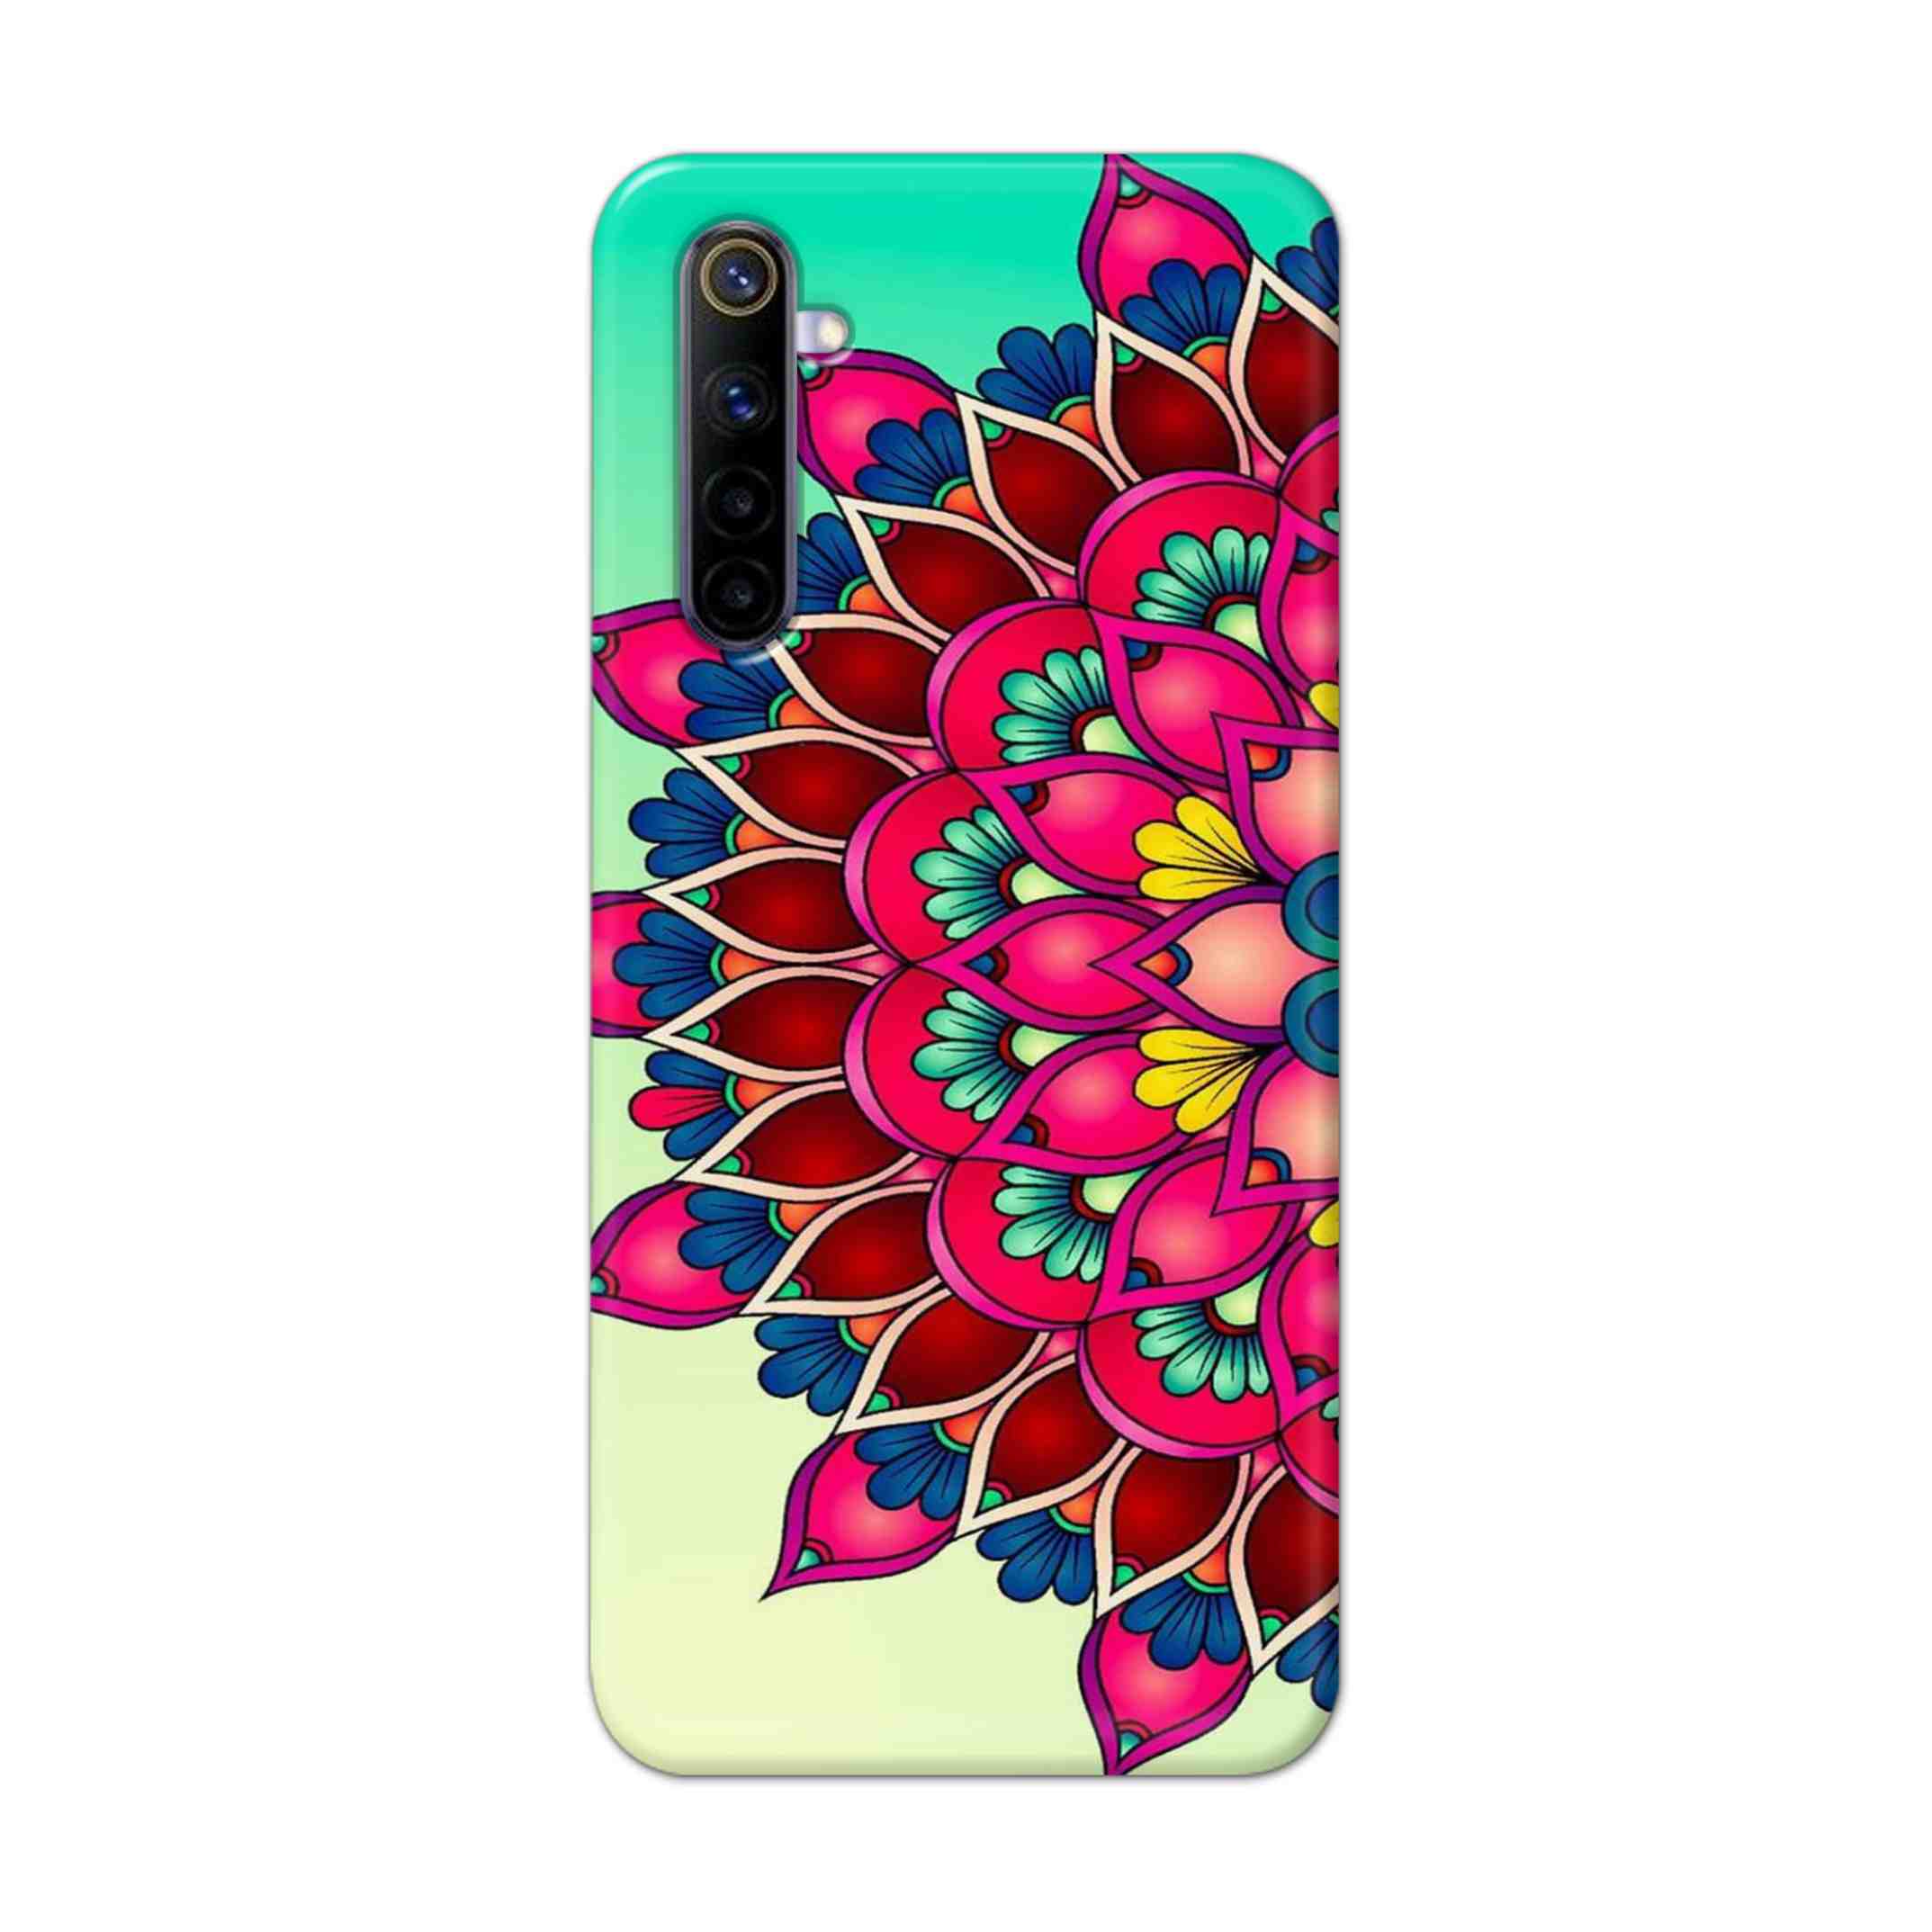 Buy Lotus Mandala Hard Back Mobile Phone Case Cover For REALME 6 PRO Online